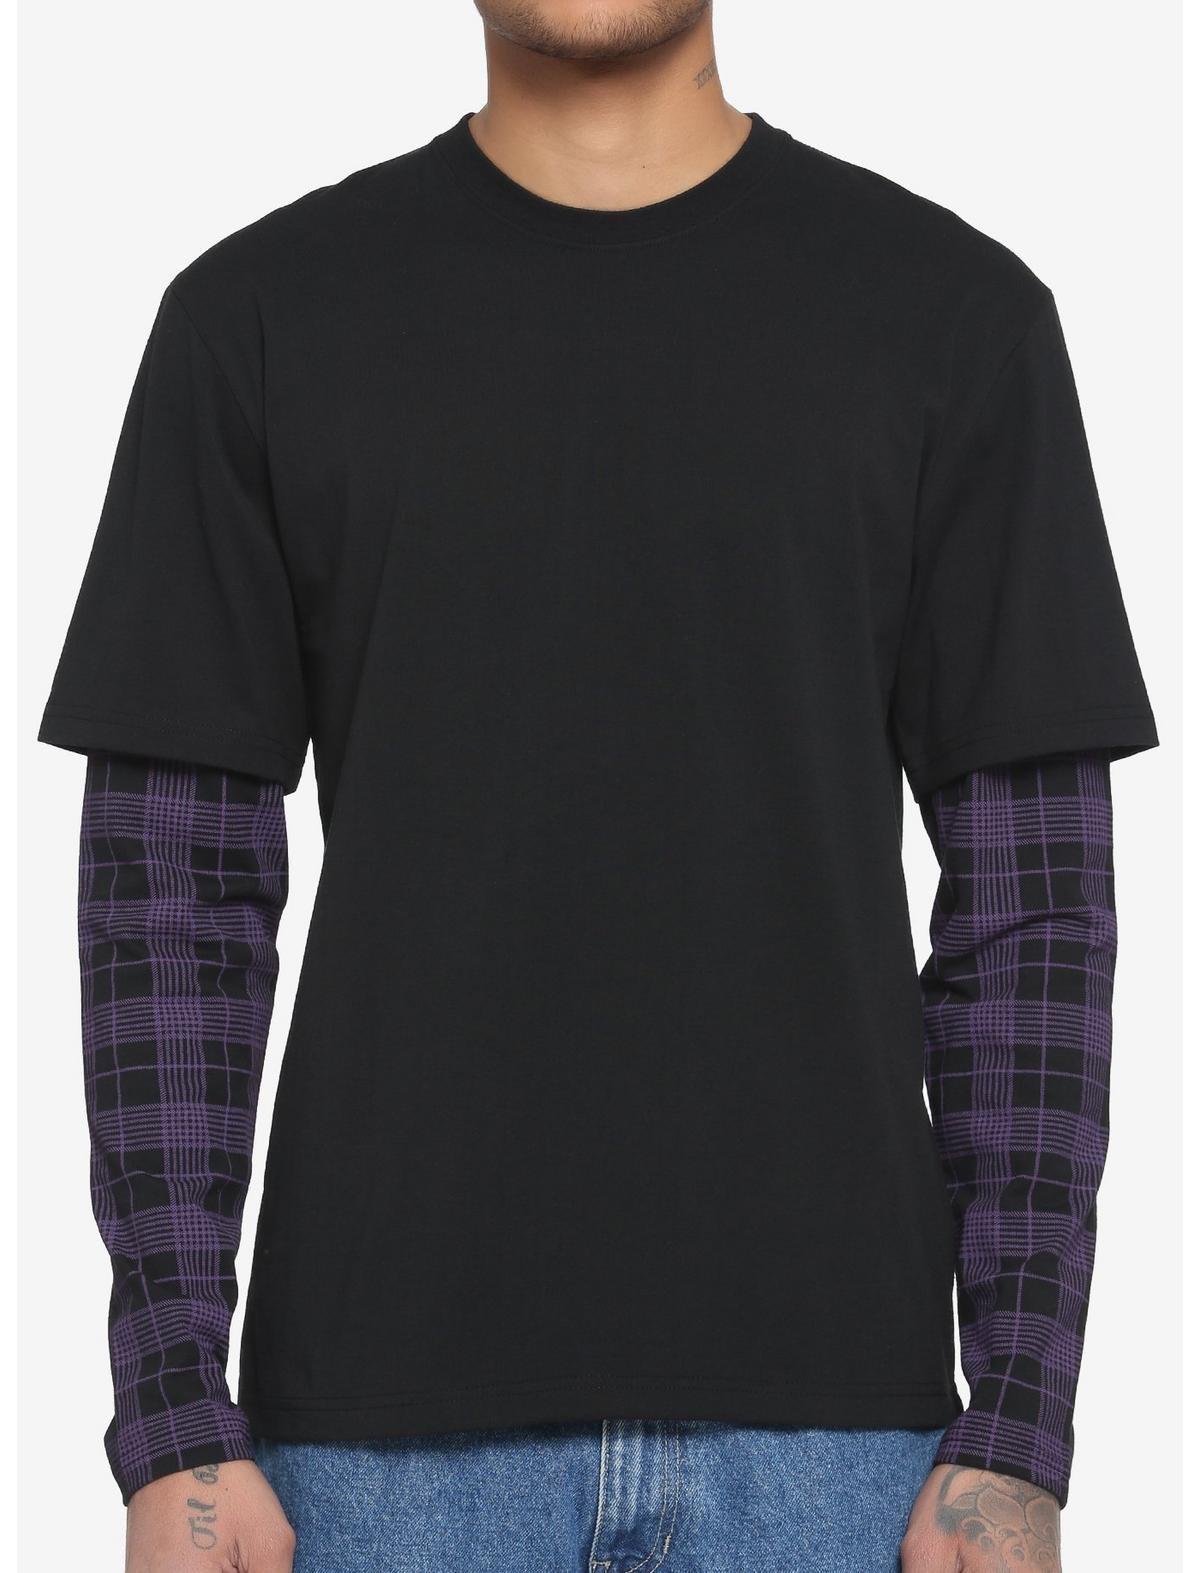 Black & Purple Plaid Sleeve Twofer Long-Sleeve T-Shirt, PURPLE  BLACK, hi-res